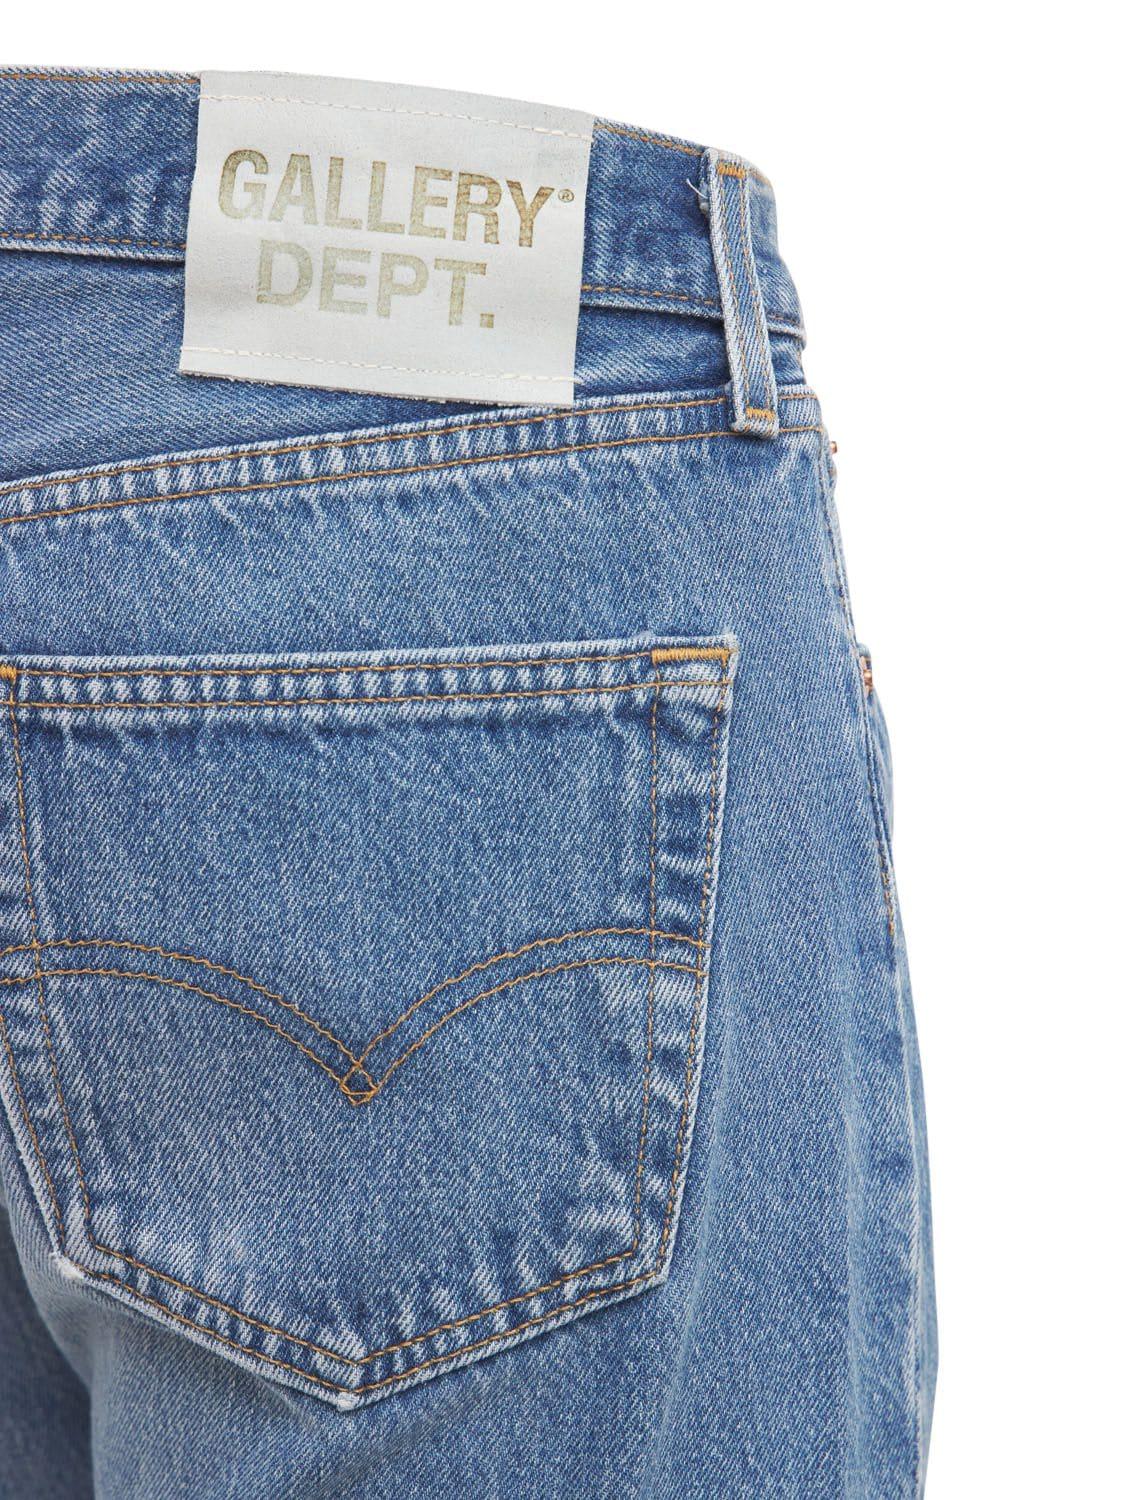 GALLERY DEPT. 5001 Indigo Cotton Denim Jeans in Blue for Men | Lyst Canada